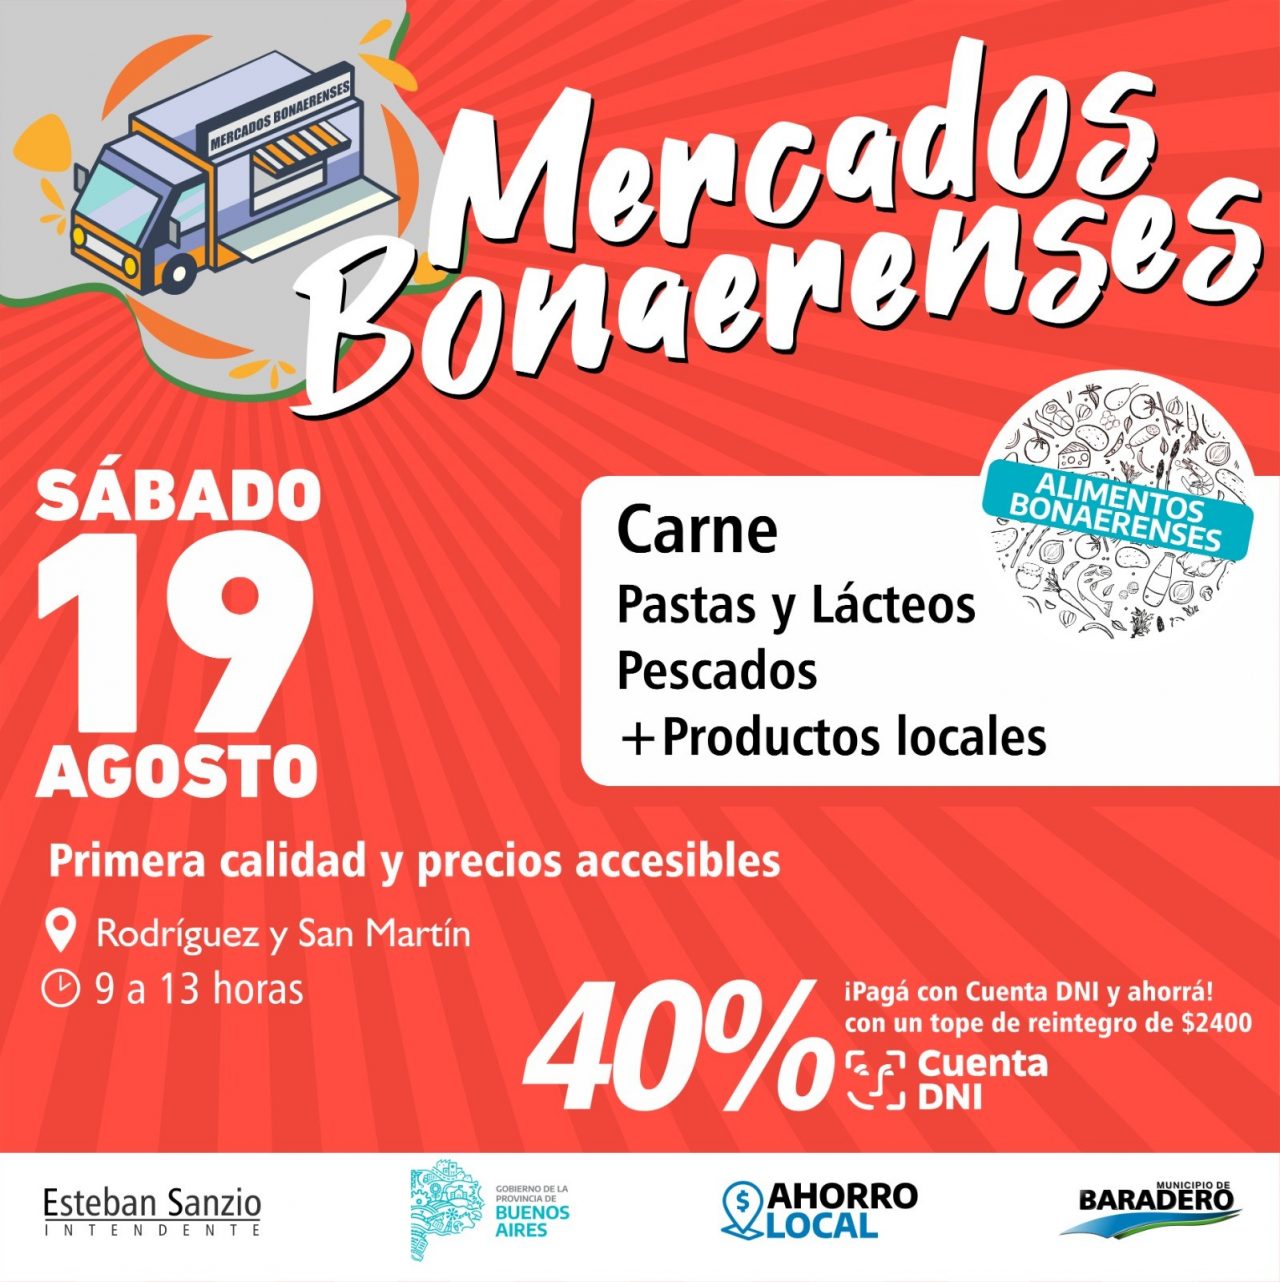 Mercados_Bonaerenses-1280x1282-1.jpg